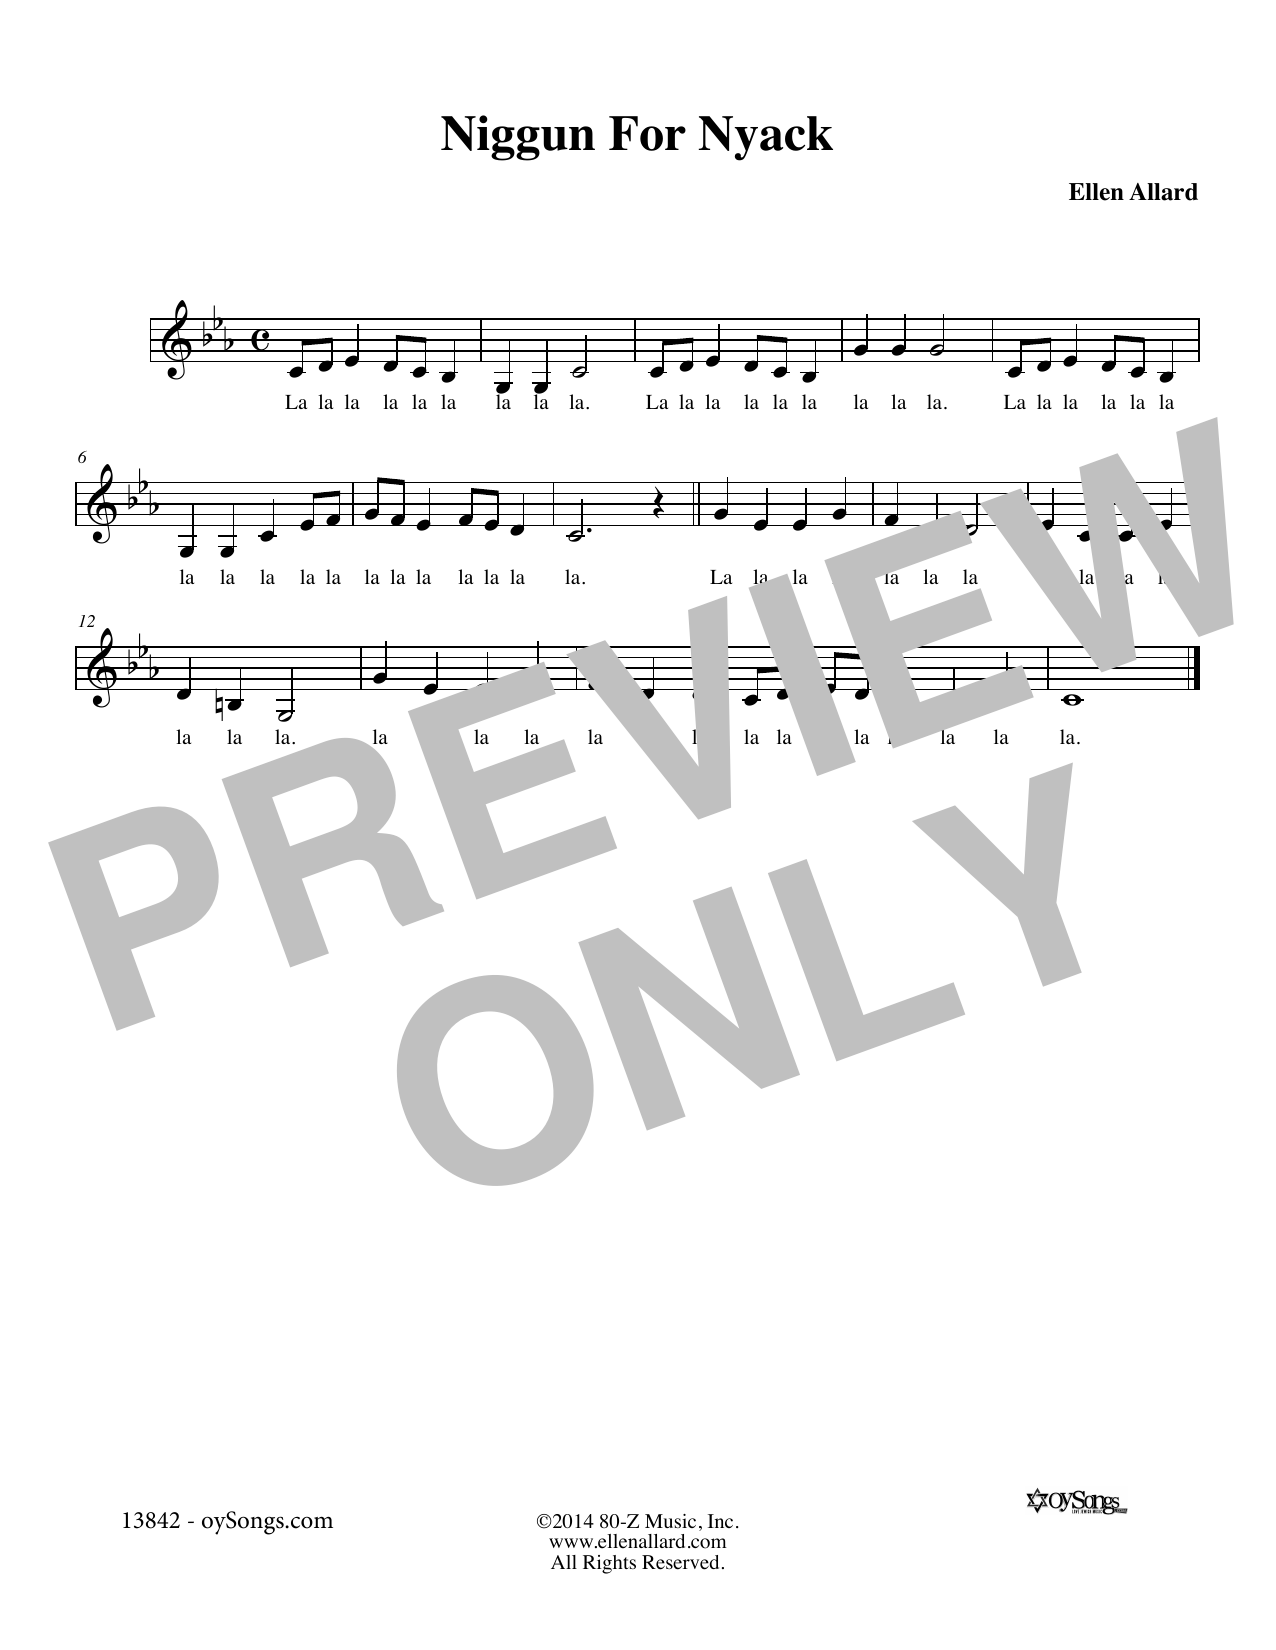 Download Ellen Allard Niggun For Nyack Sheet Music and learn how to play Melody Line, Lyrics & Chords PDF digital score in minutes